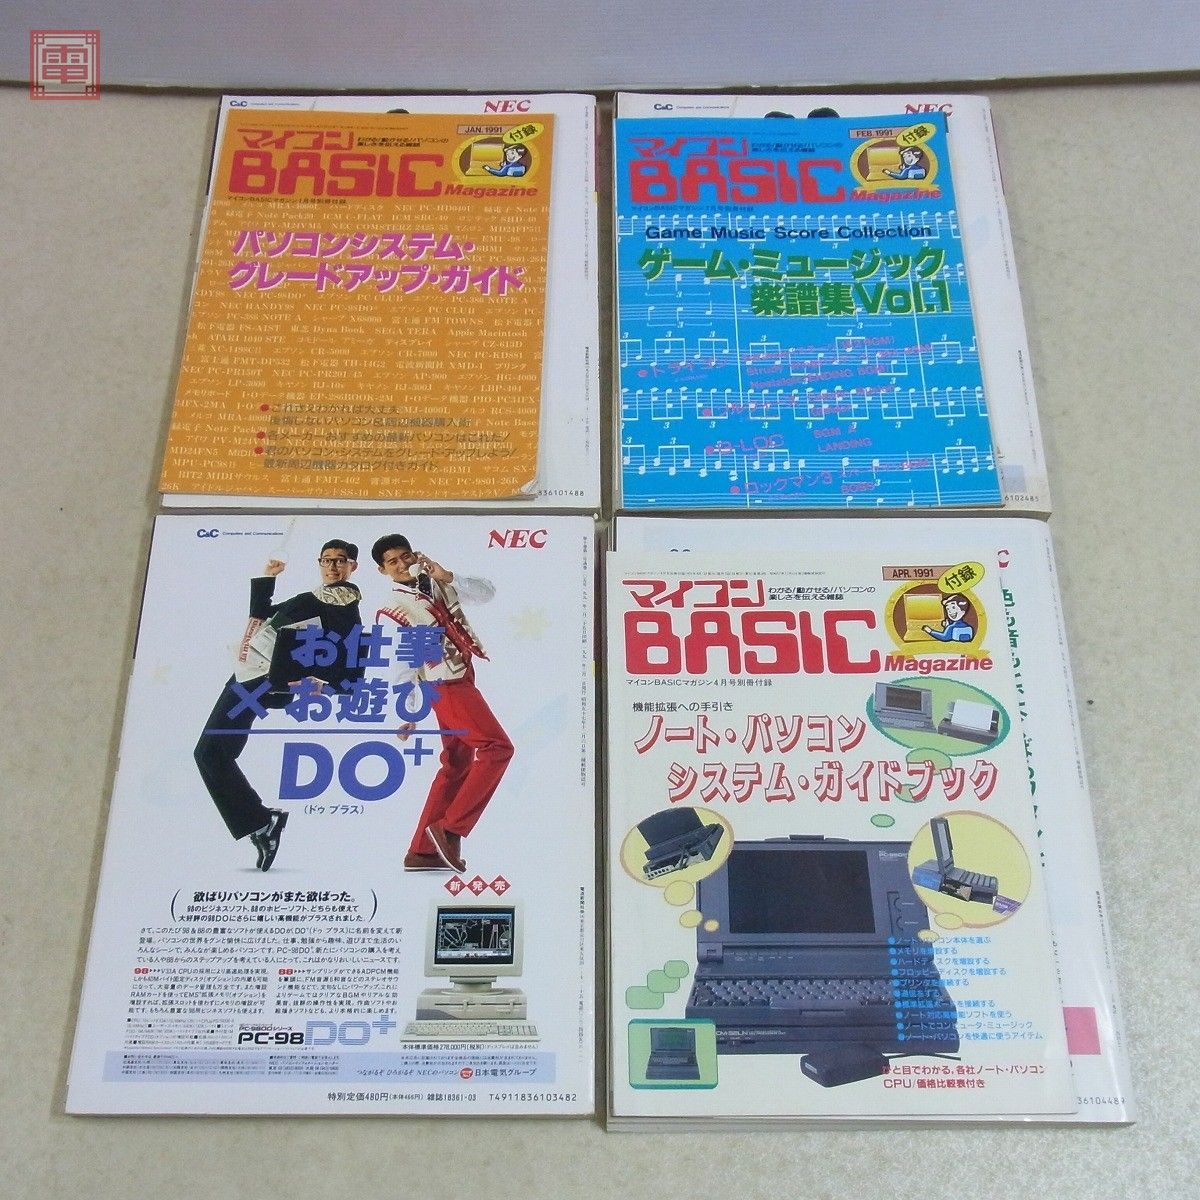  журнал microcomputer BASIC журнал 1991 год 12 шт. комплект через год .. беж maga радиоволны газета фирма [20